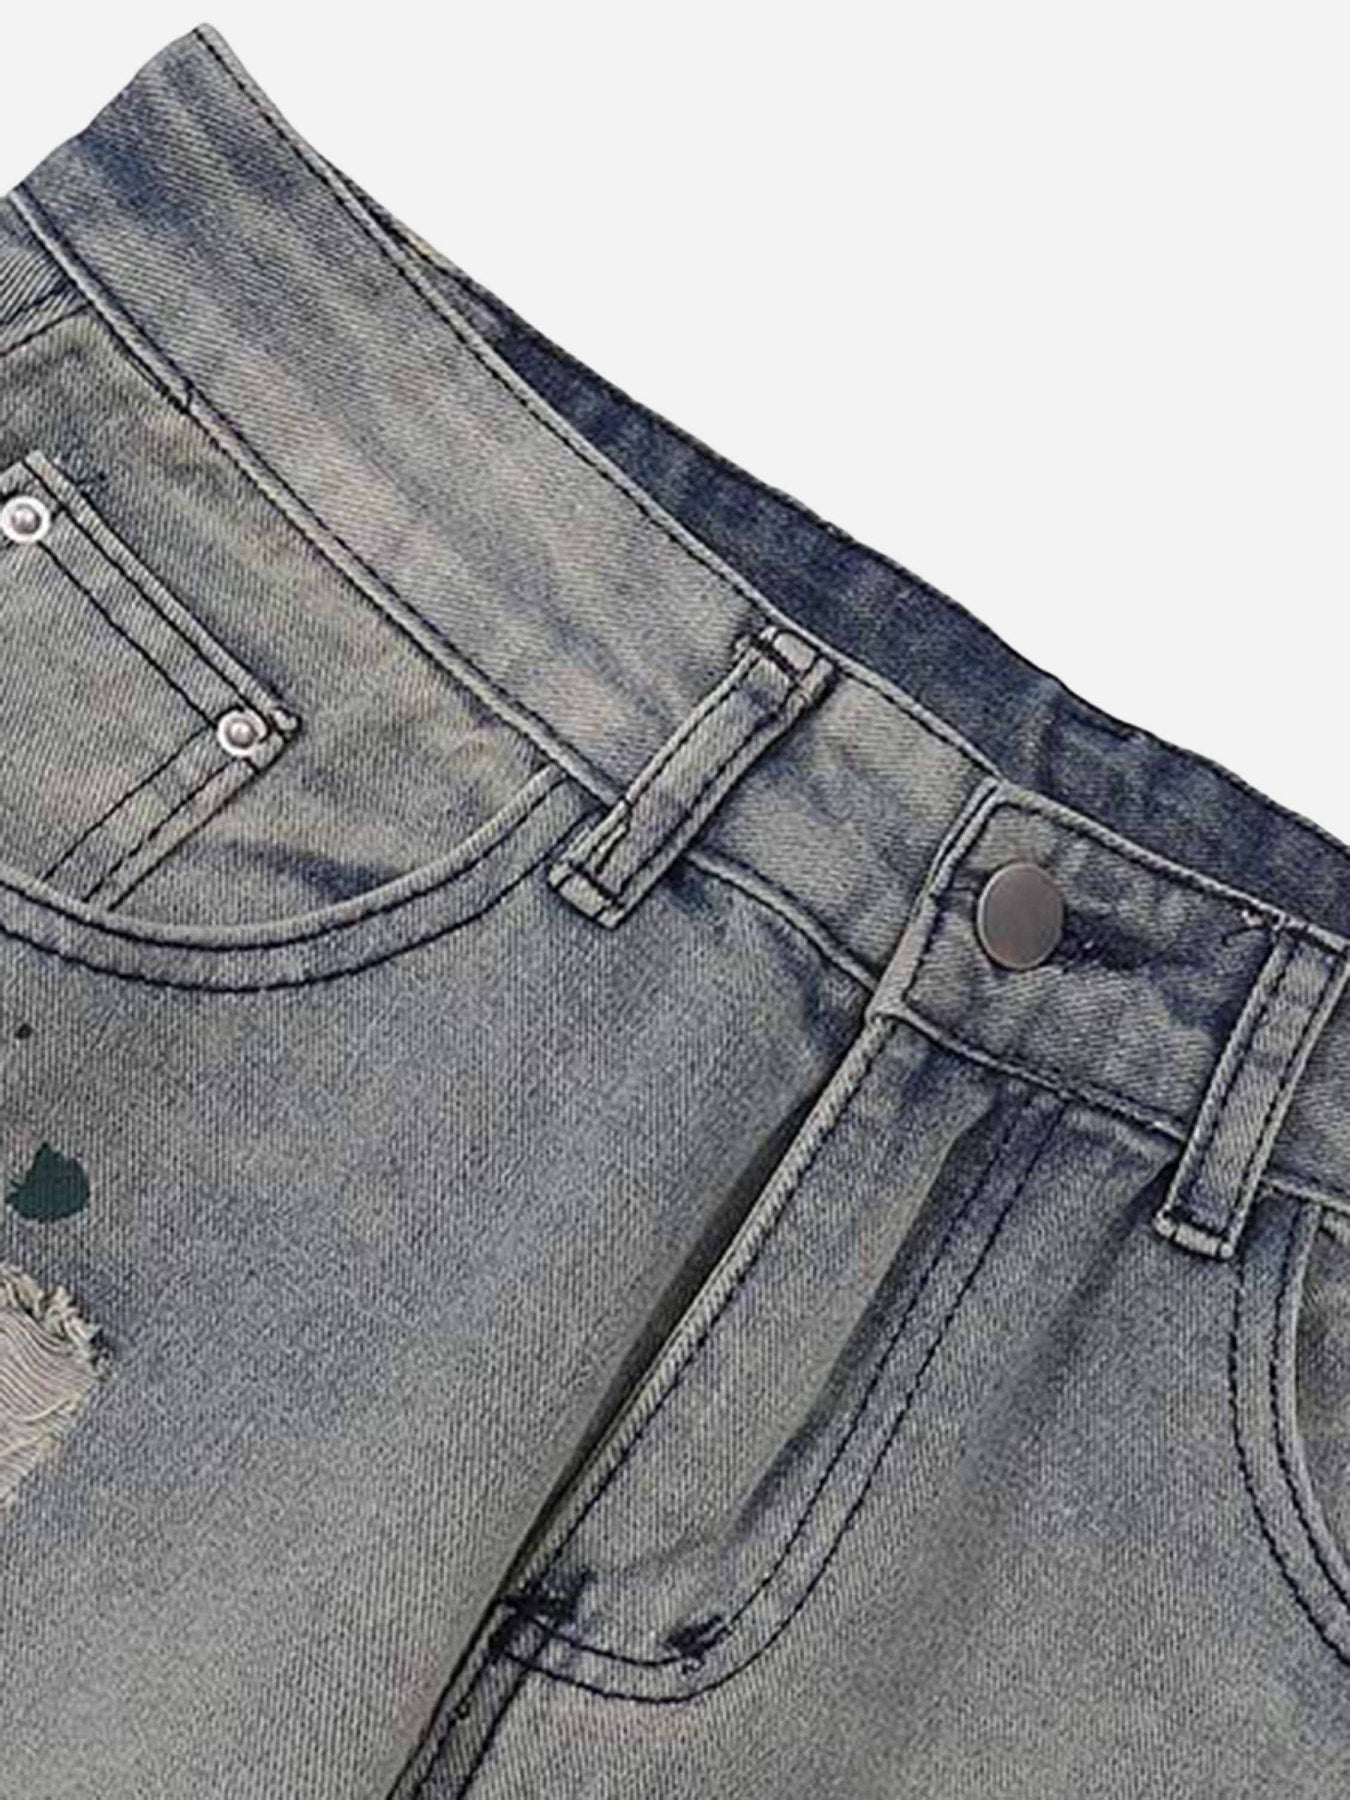 The Supermade Vintage Ink Splash Washed And Distressed Jeans